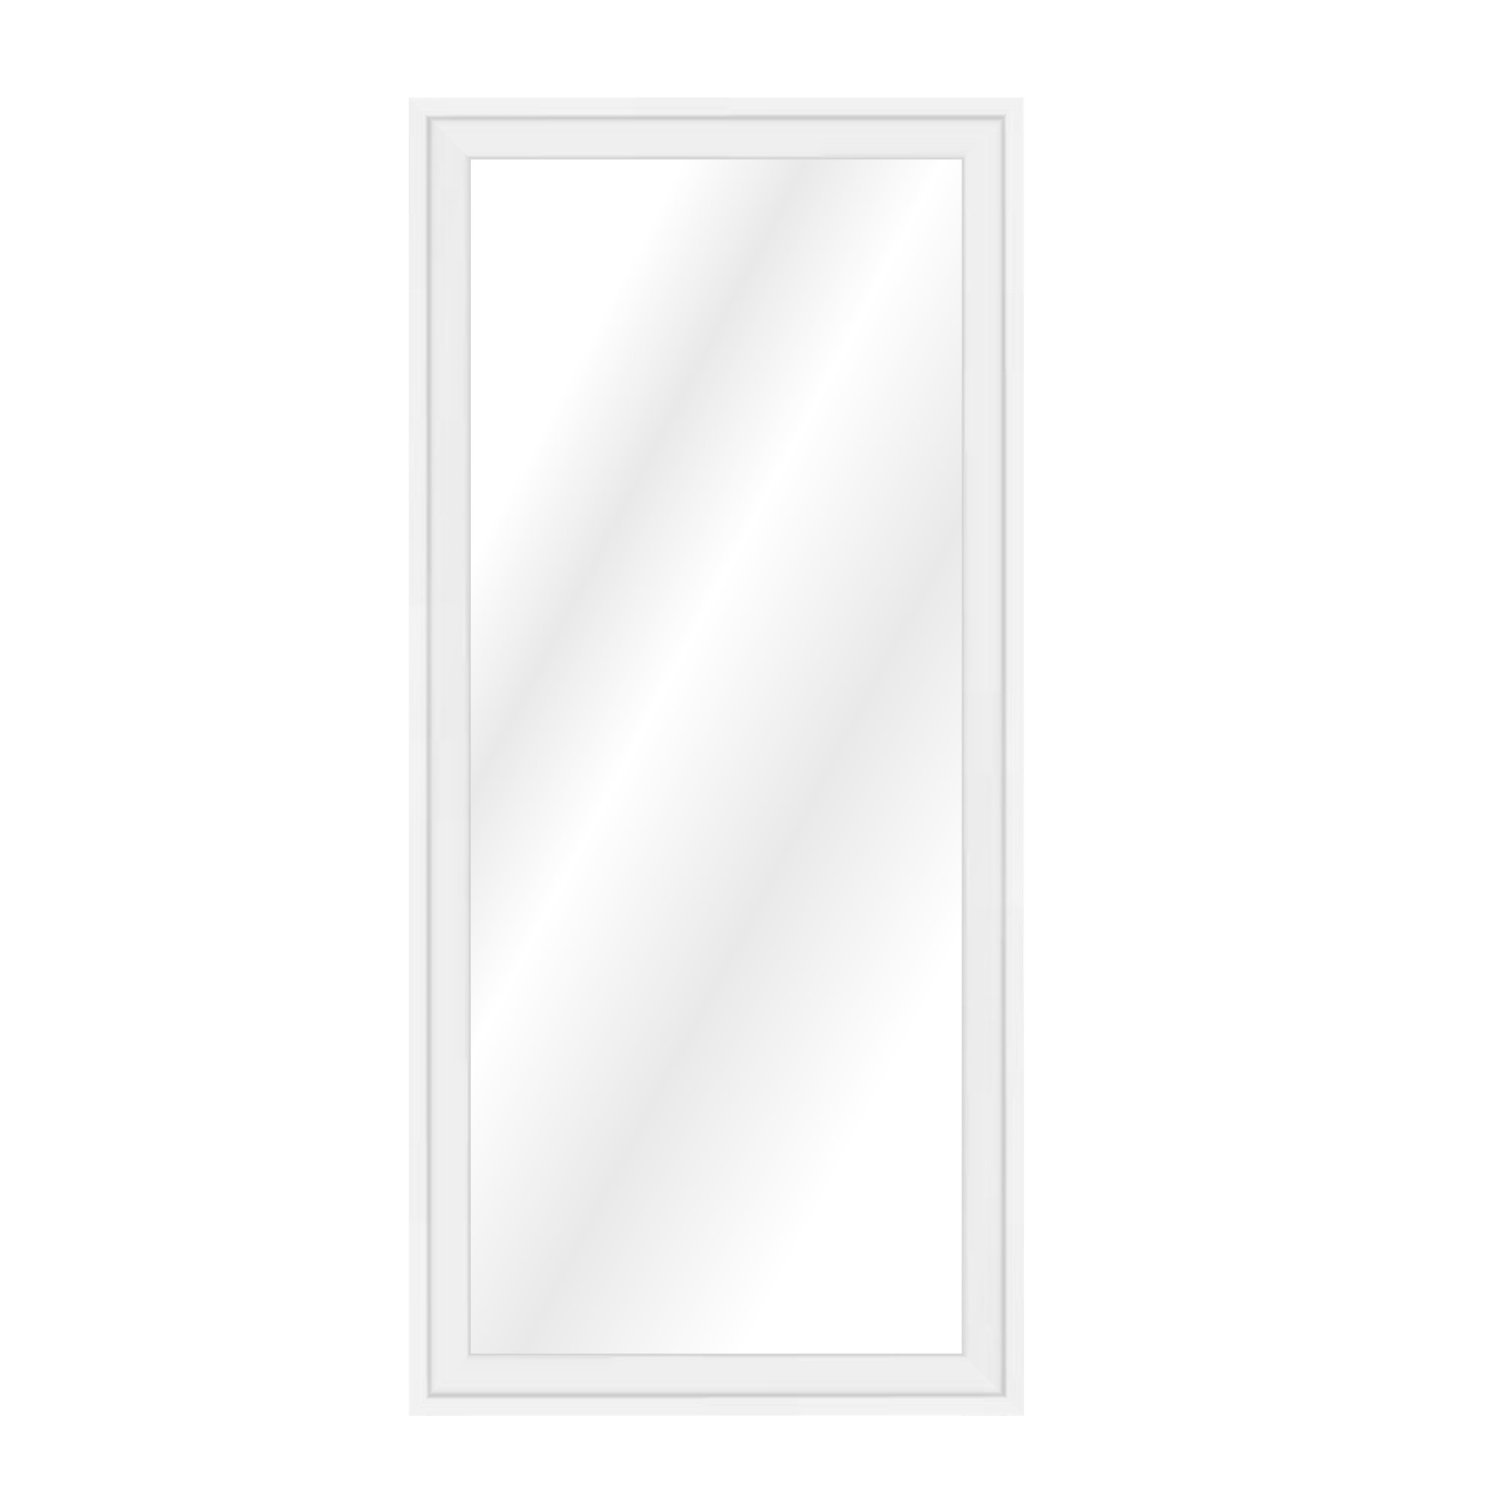 Espelho Elegant 150br 70cm X 150cm - 1